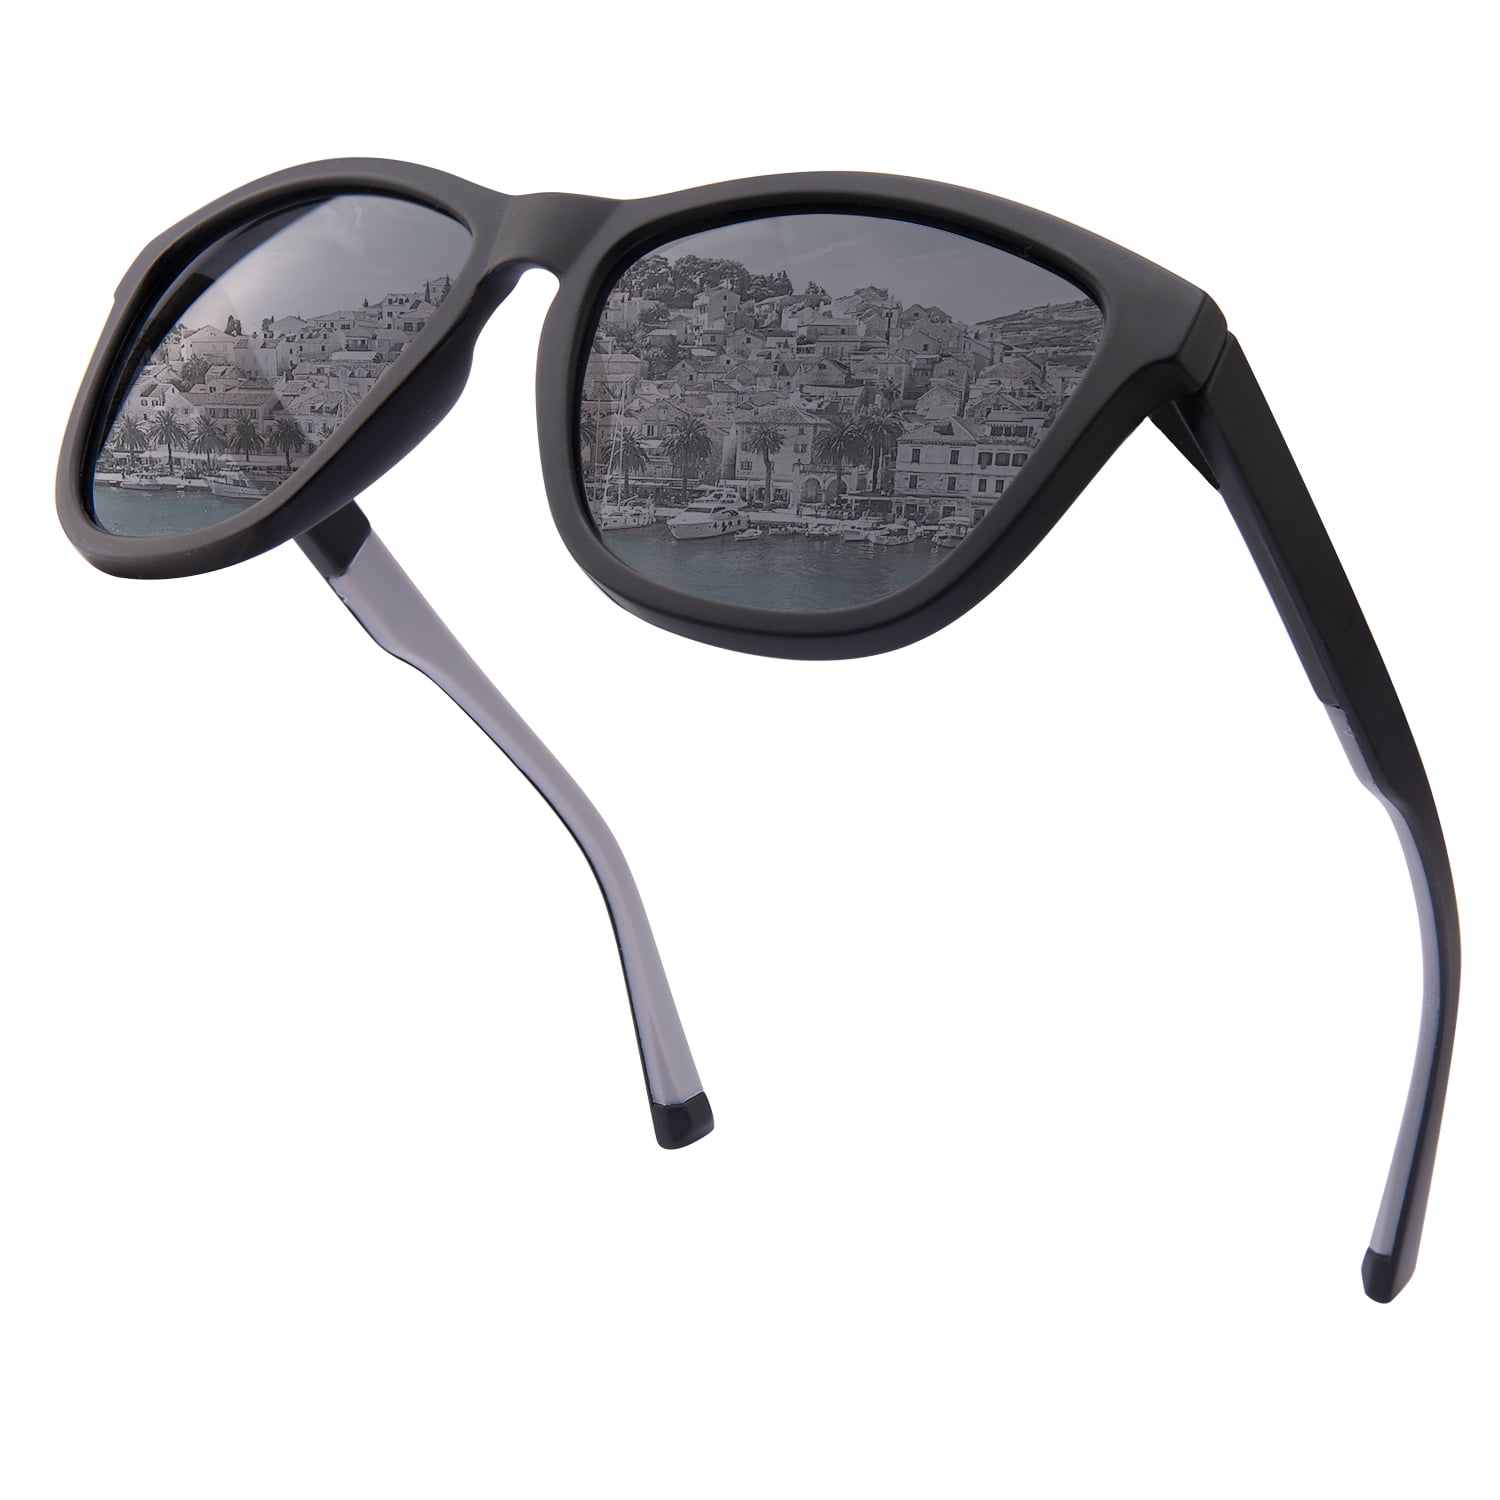 Accessories Sunglasses & Eyewear Sunglasses Top Brand Fashion Carrera ultraviolet film sunglasses Fashion sunglasses reflective Brand quality glasses 